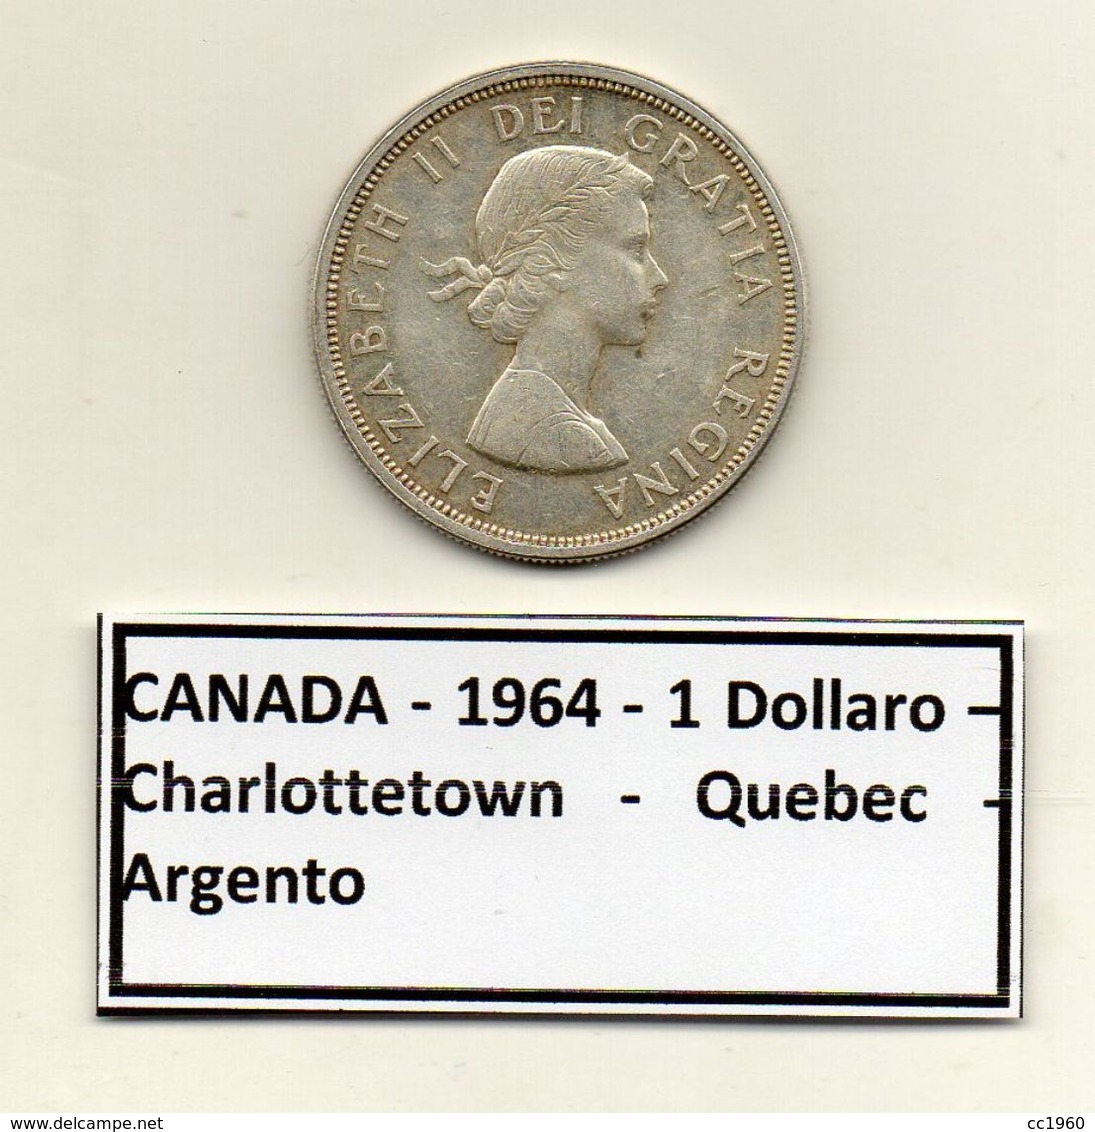 Canada - 1964 - 1 Dollaro - Charlottetown - Quebec - Argento - (MW1205) - Canada